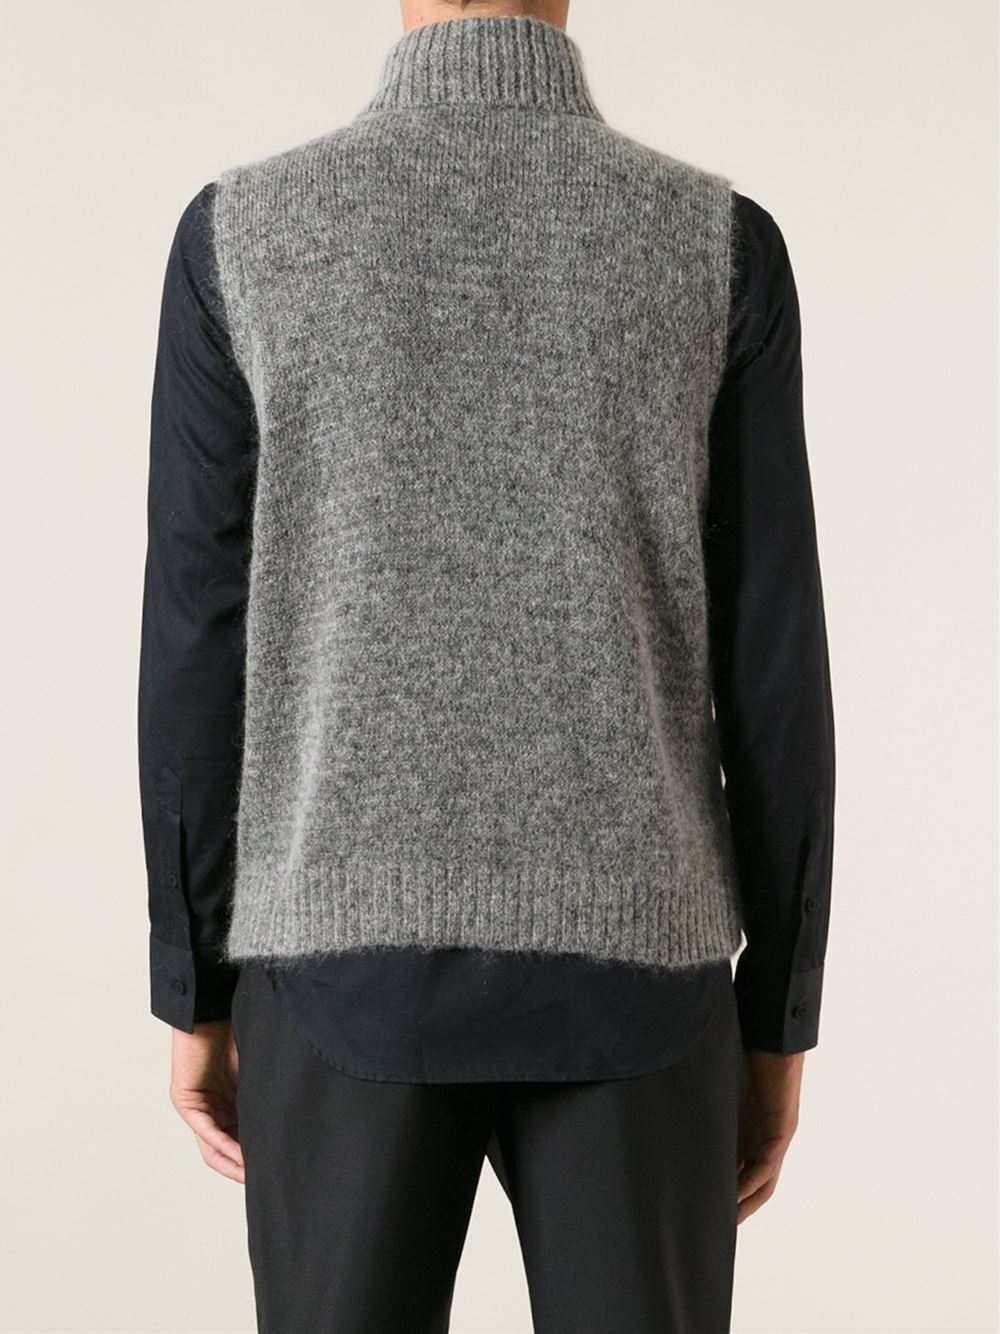 Lyst - Emporio Armani Sleeveless Sweater in Gray for Men